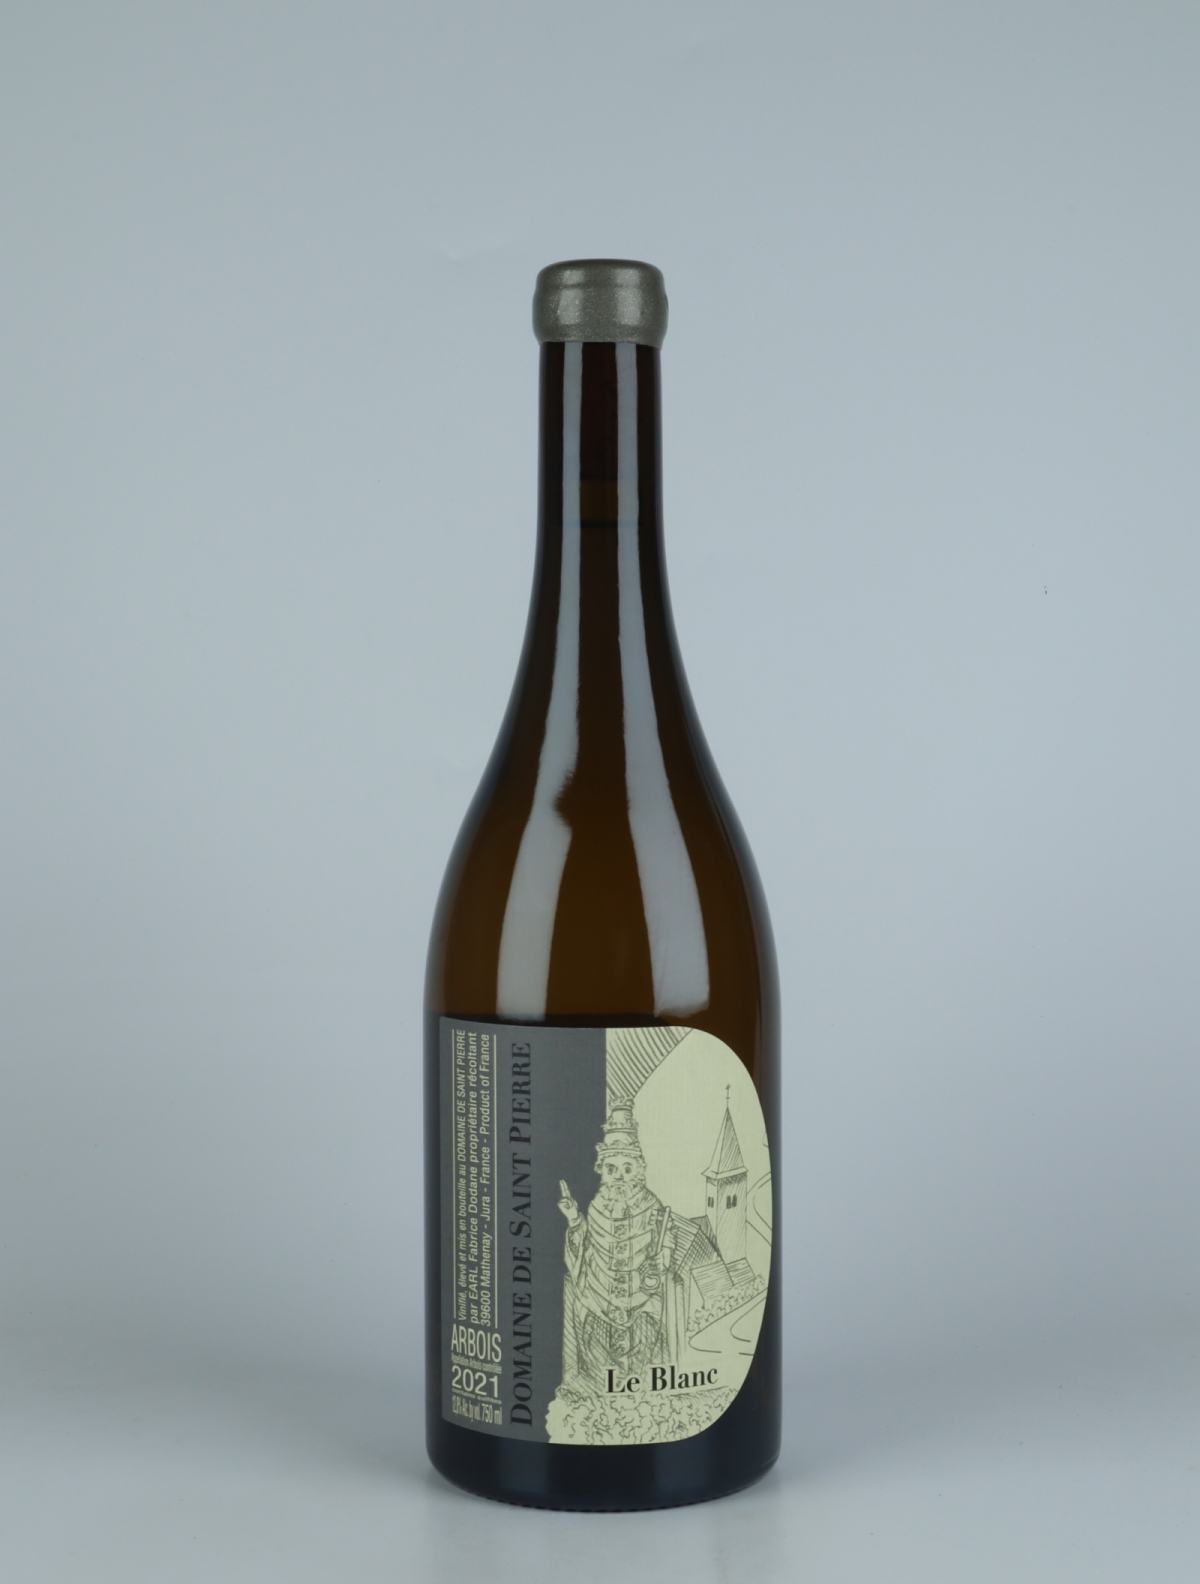 En flaske 2021 Arbois Blanc - Le Blanc Hvidvin fra Domaine de Saint Pierre, Jura i Frankrig